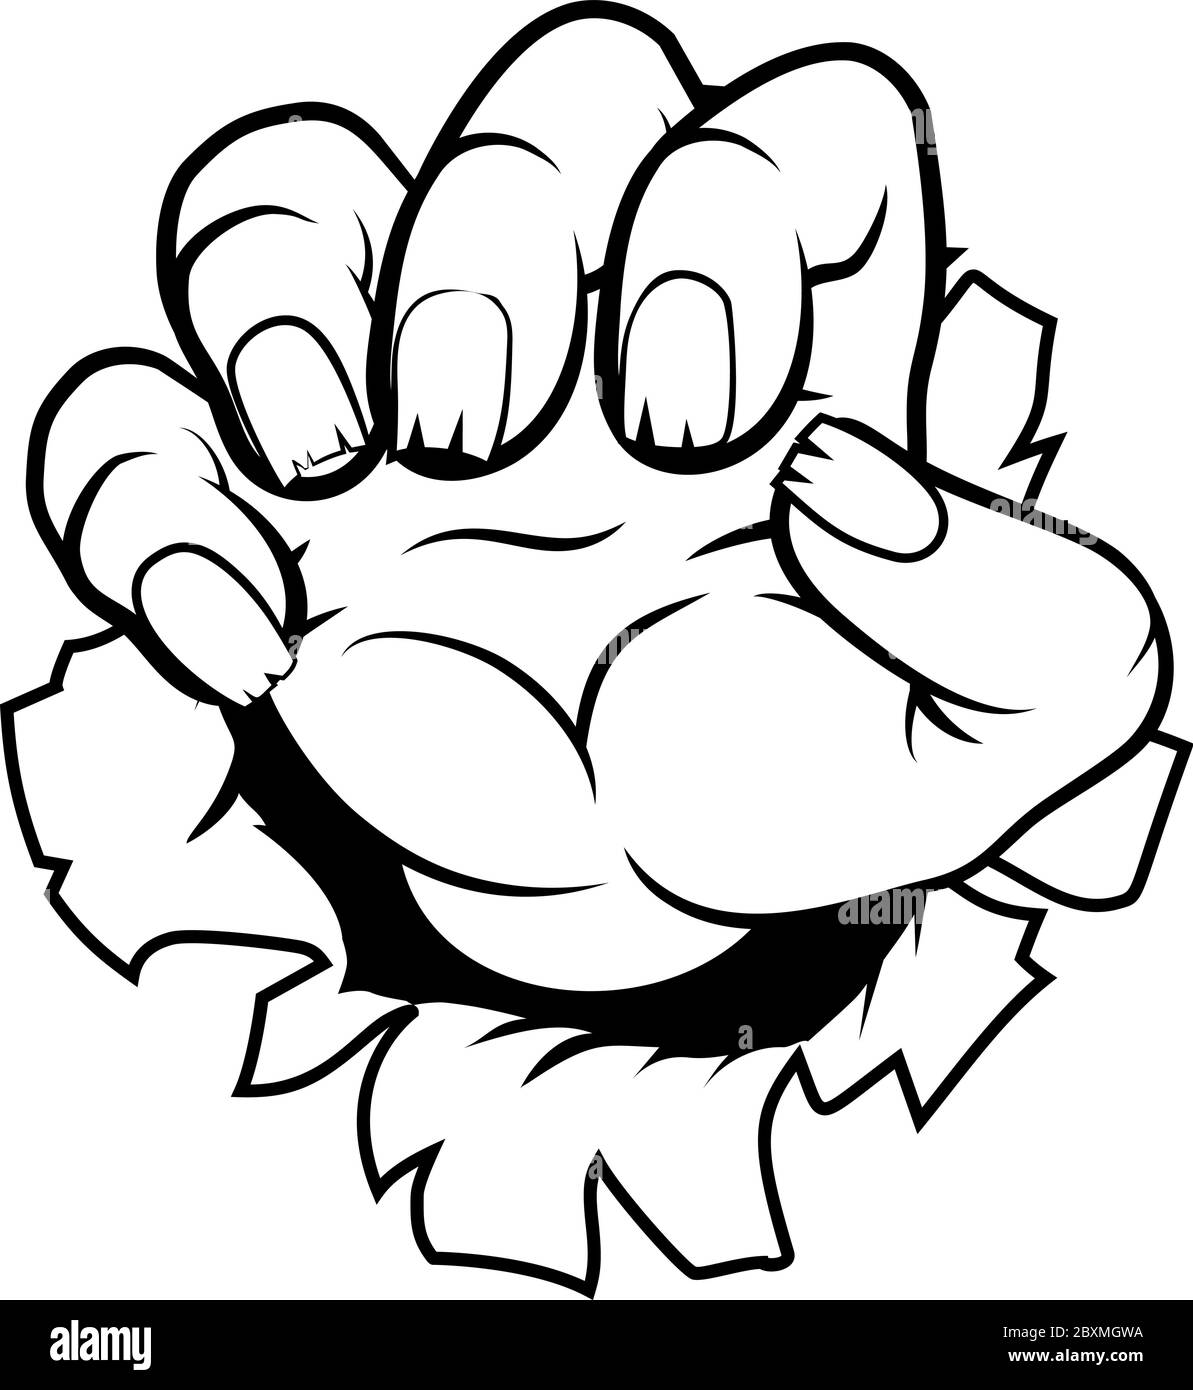 Monster Claw Cartoon Hand Stock Vector